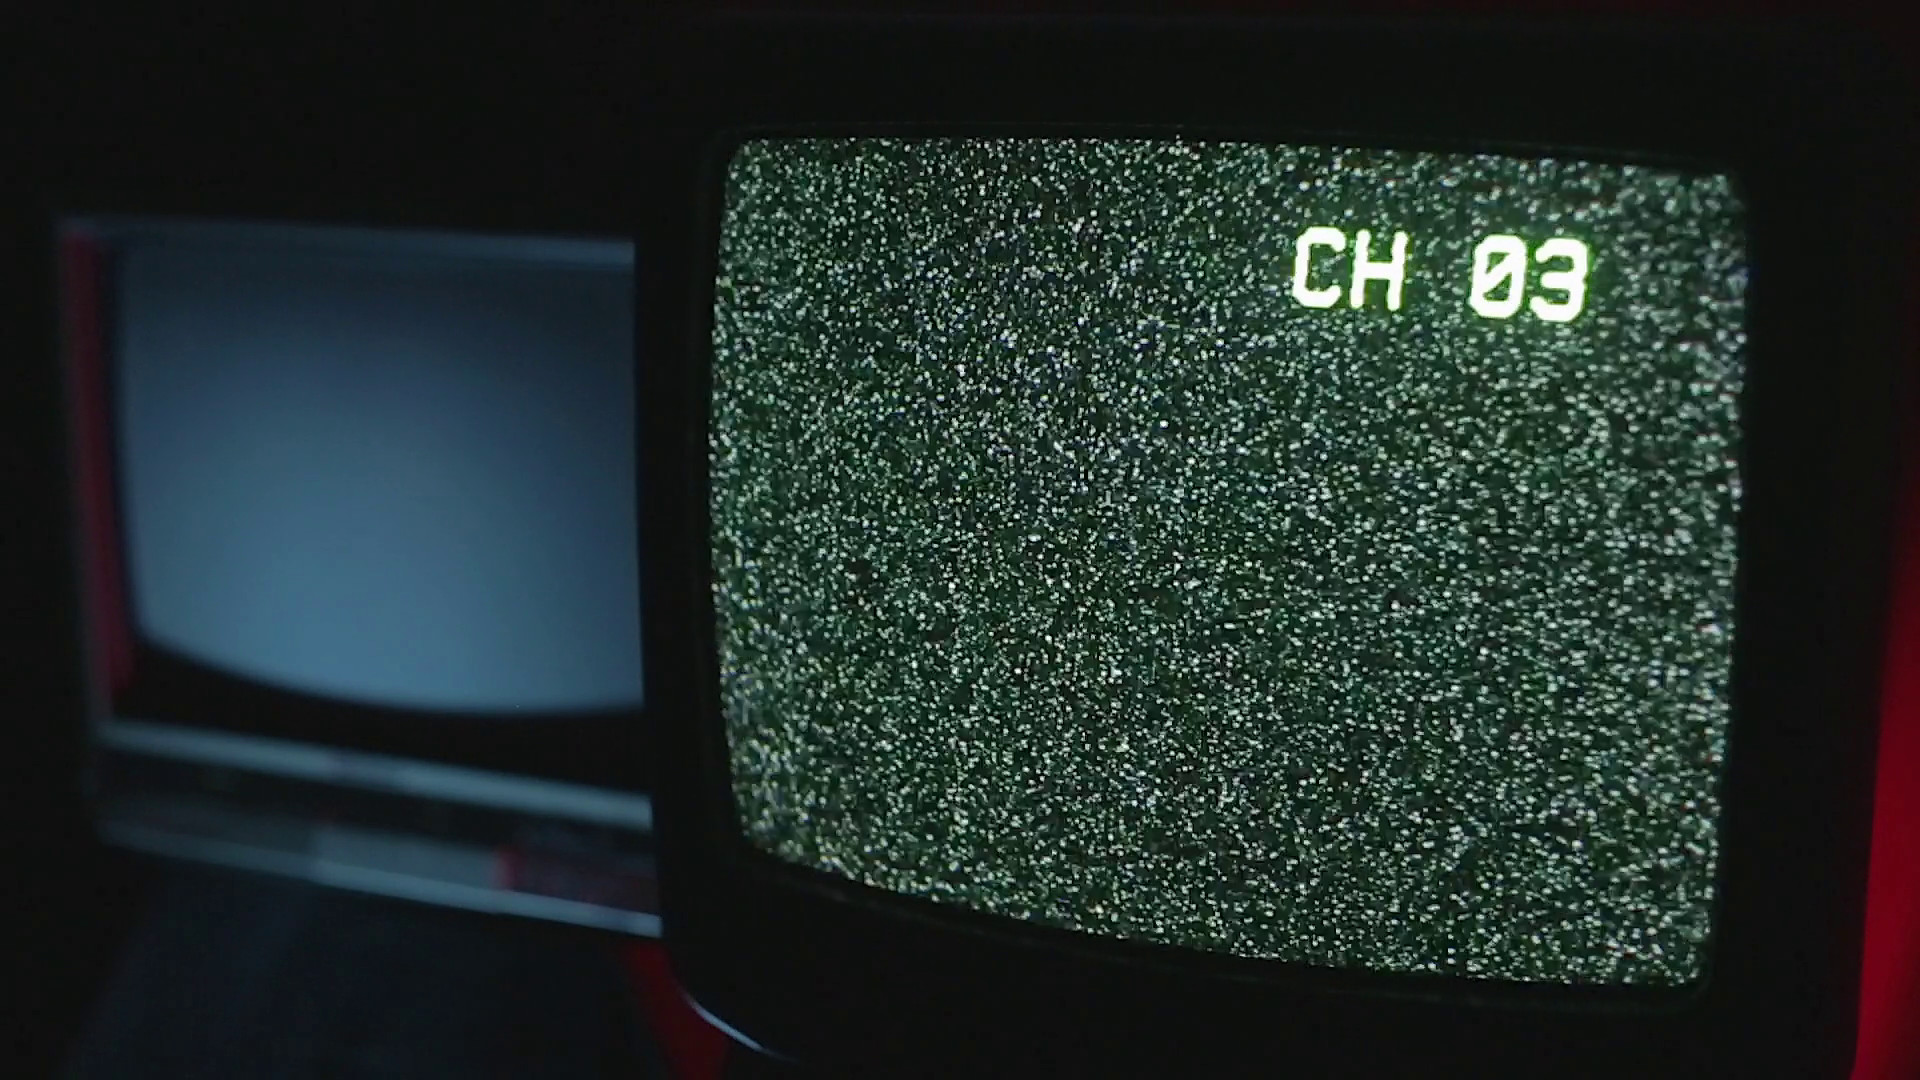 1920x1080, Retro Tvs In A Dark Room - Dark Television - HD Wallpaper 